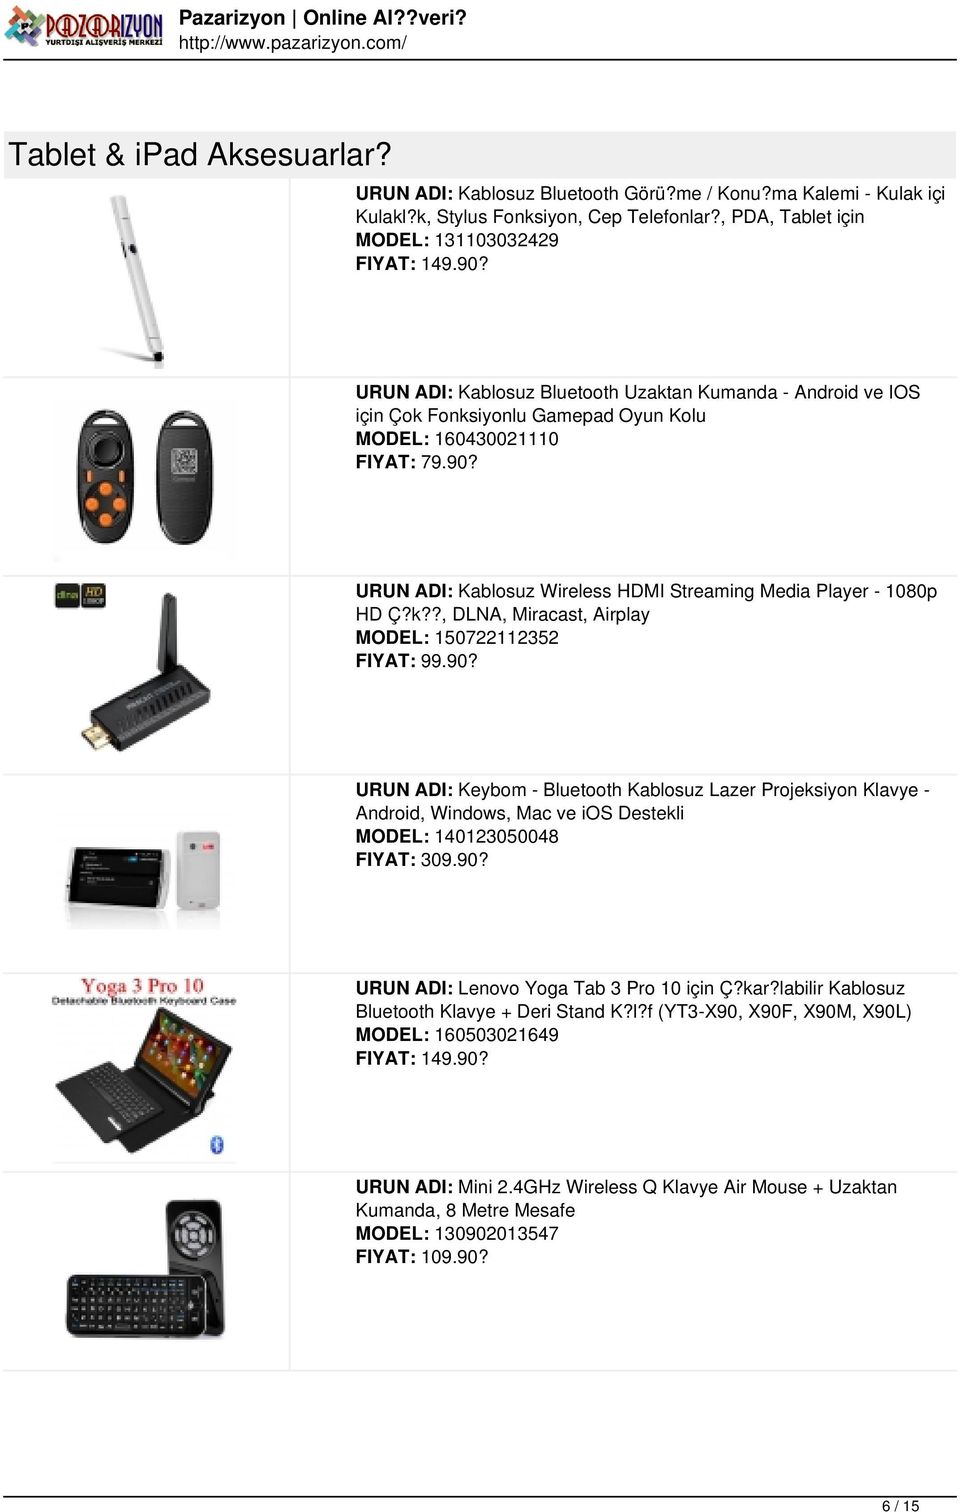 URUN ADI: Kablosuz Wireless HDMI Streaming Media Player - 1080p HD Ç?k??, DLNA, Miracast, Airplay MODEL: 150722112352 FIYAT: 99.90?